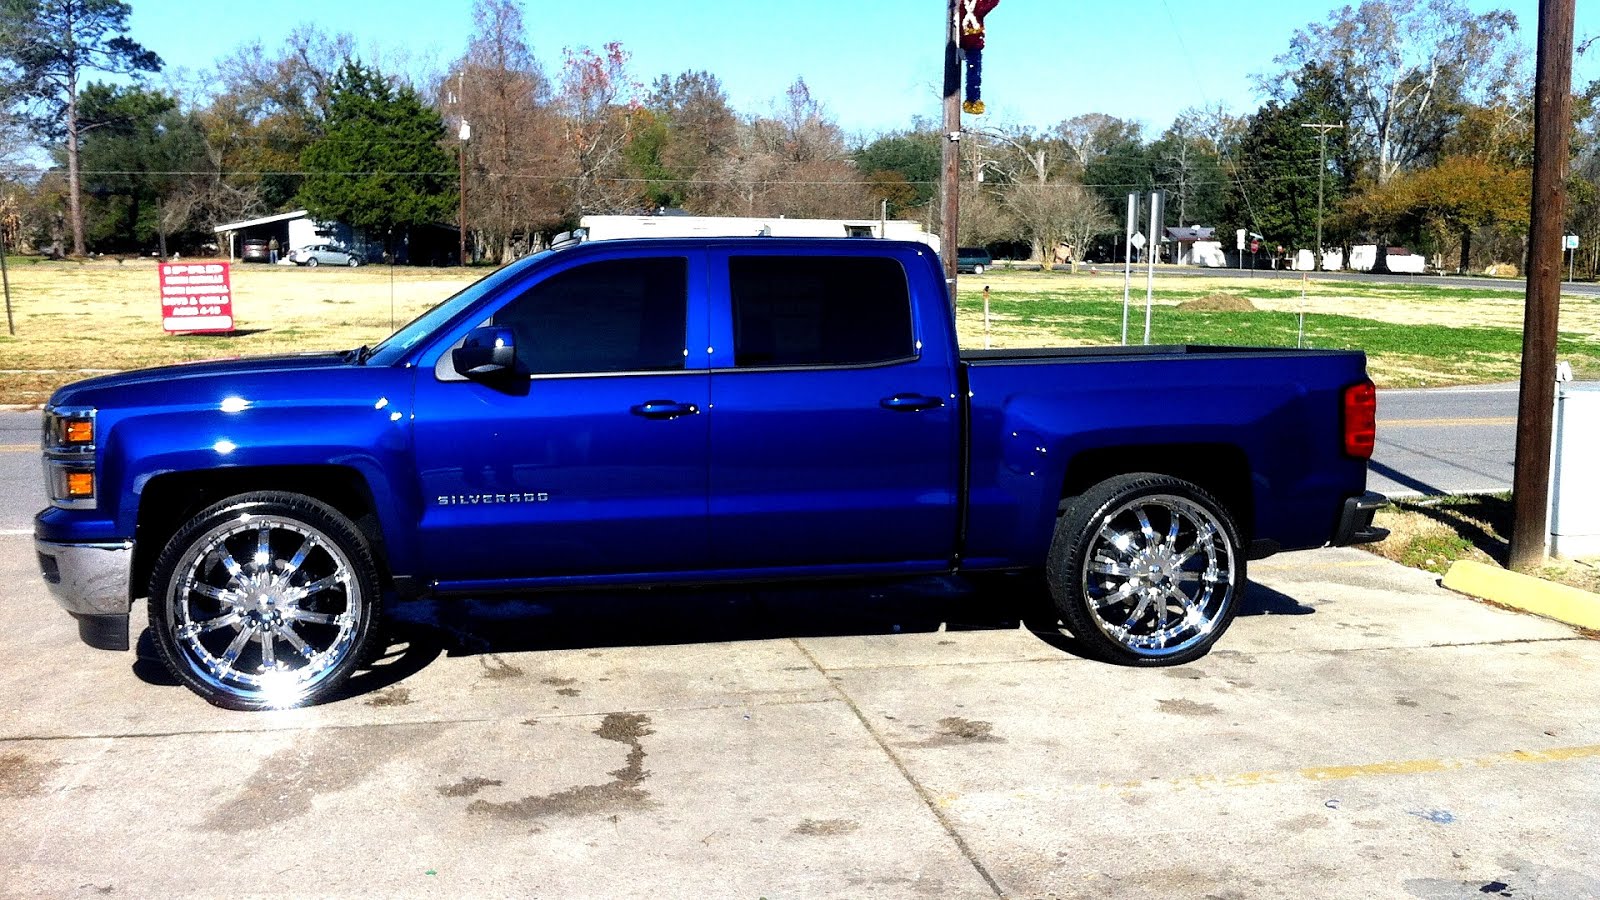 2014 Blue Chevy Silverado - Blue Choices